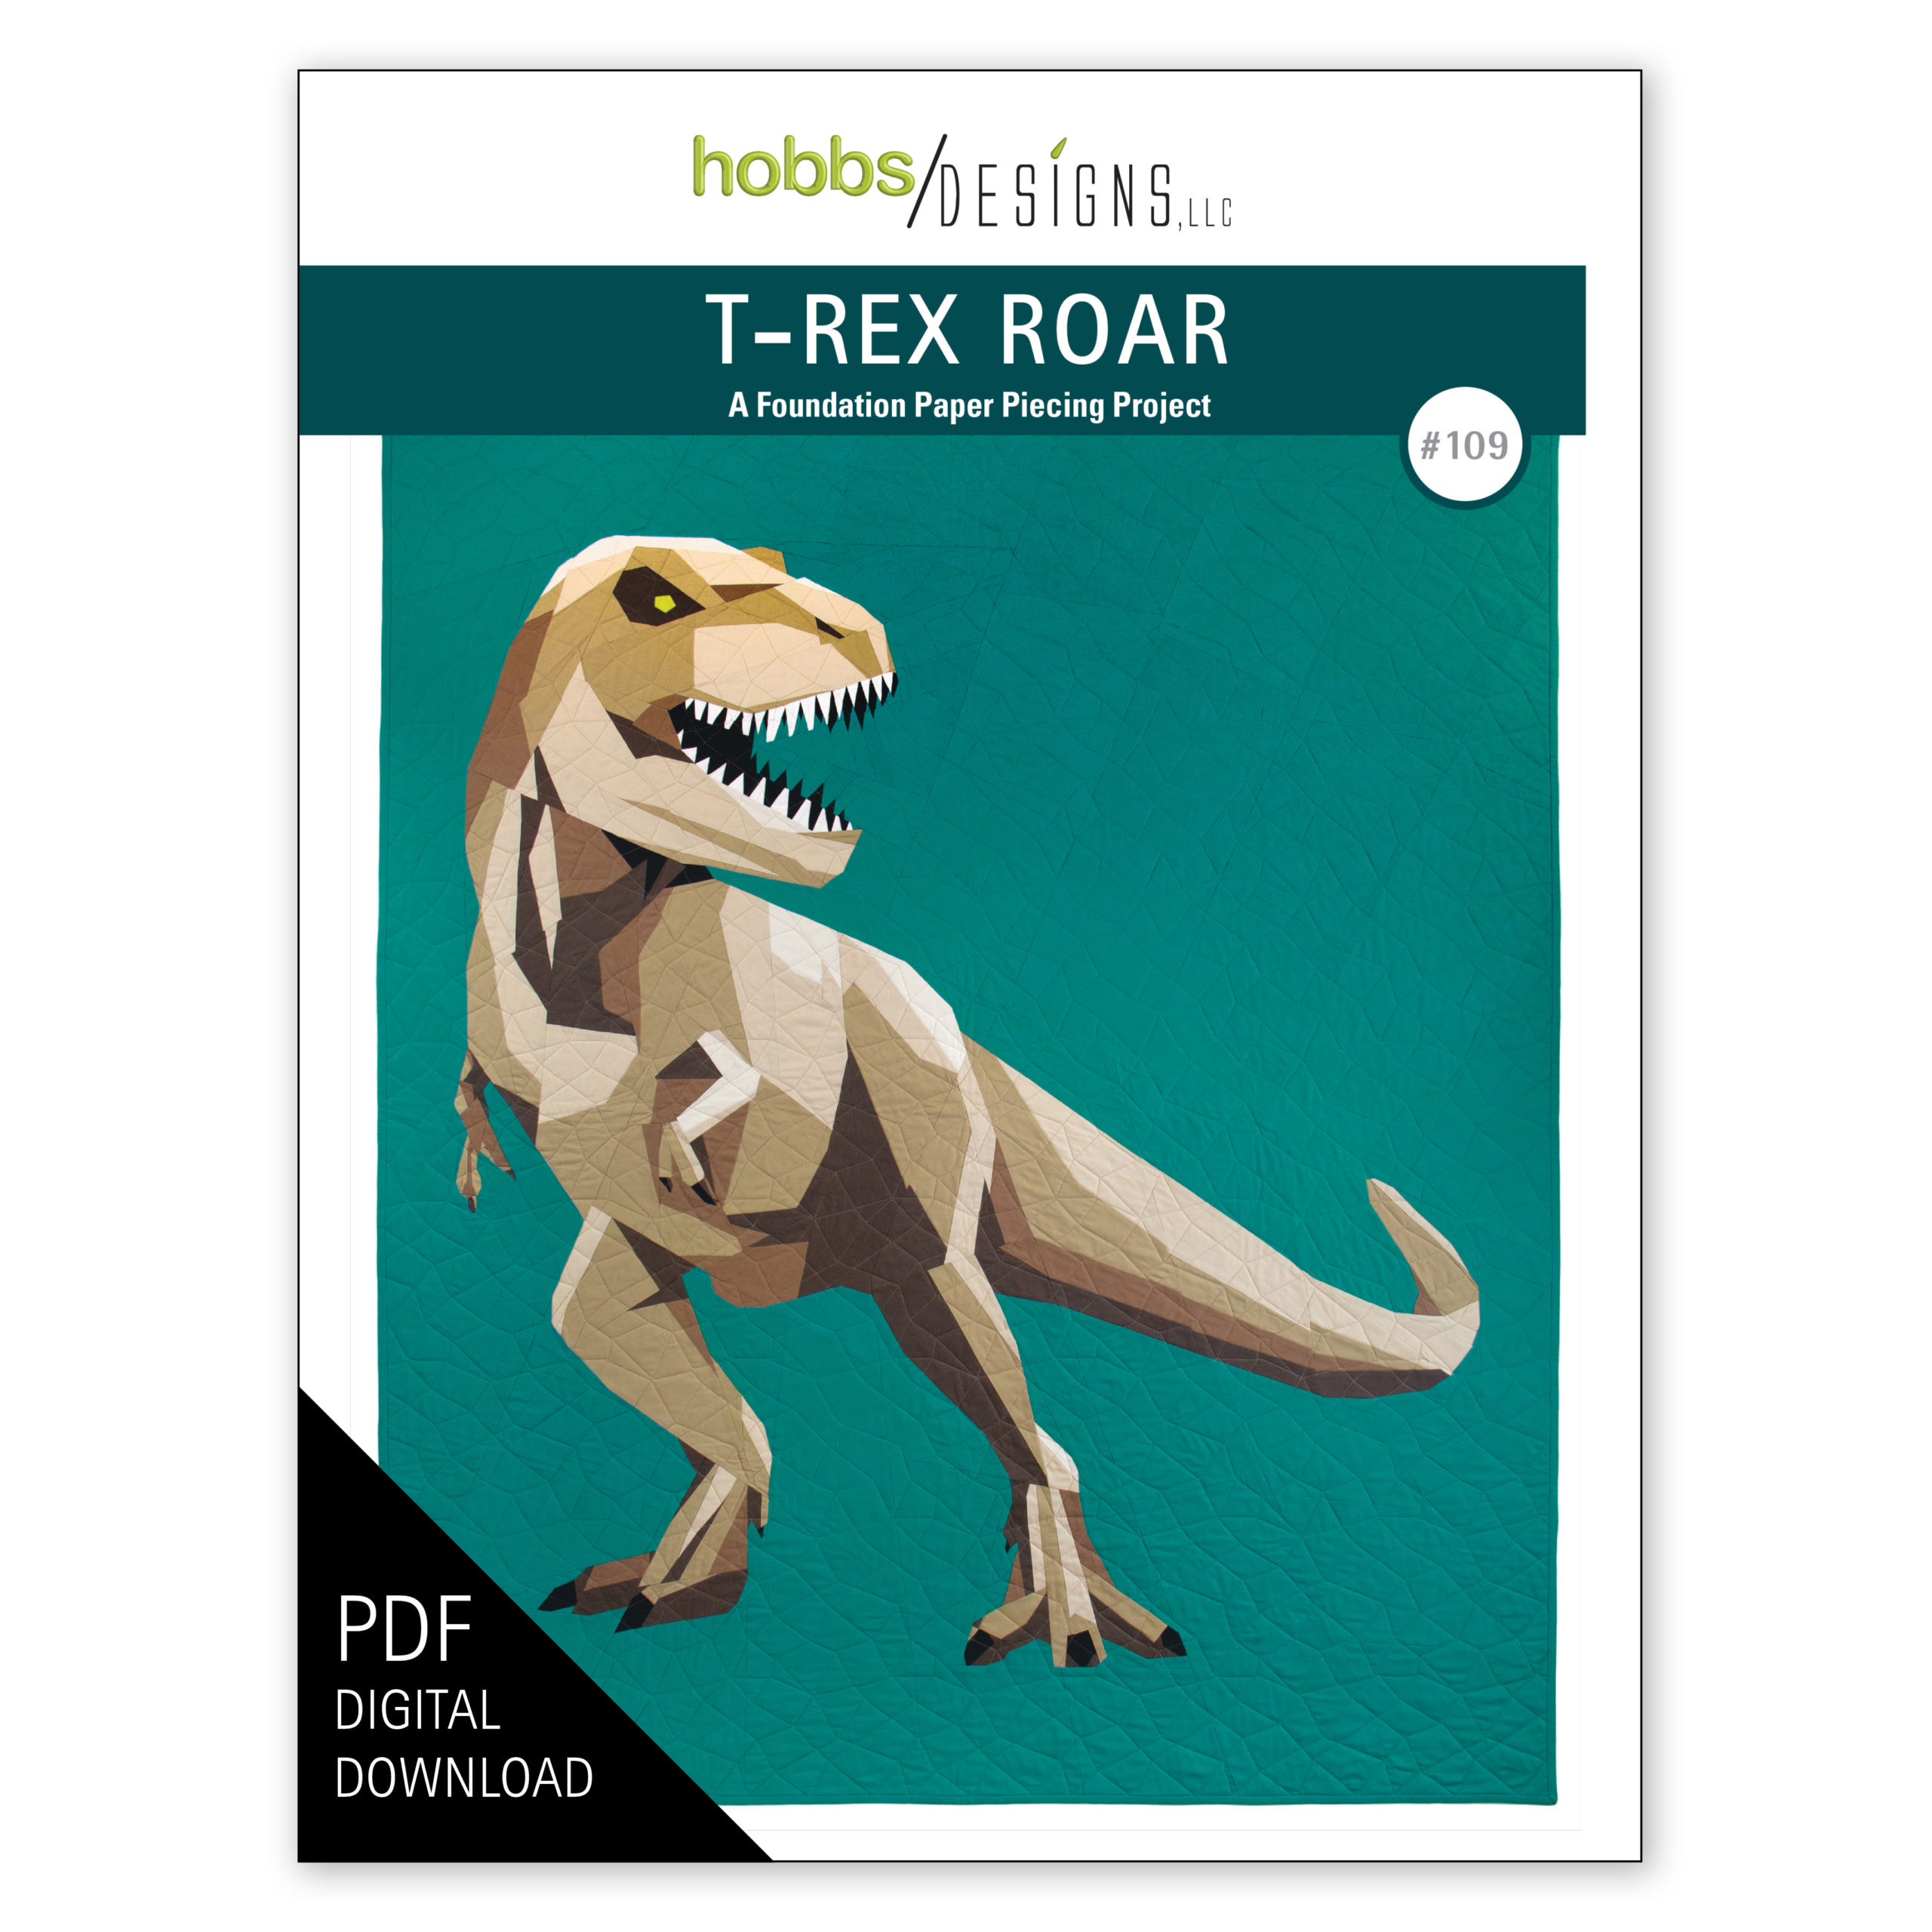 T-Rex Roar Digital Quilt Pattern Cover